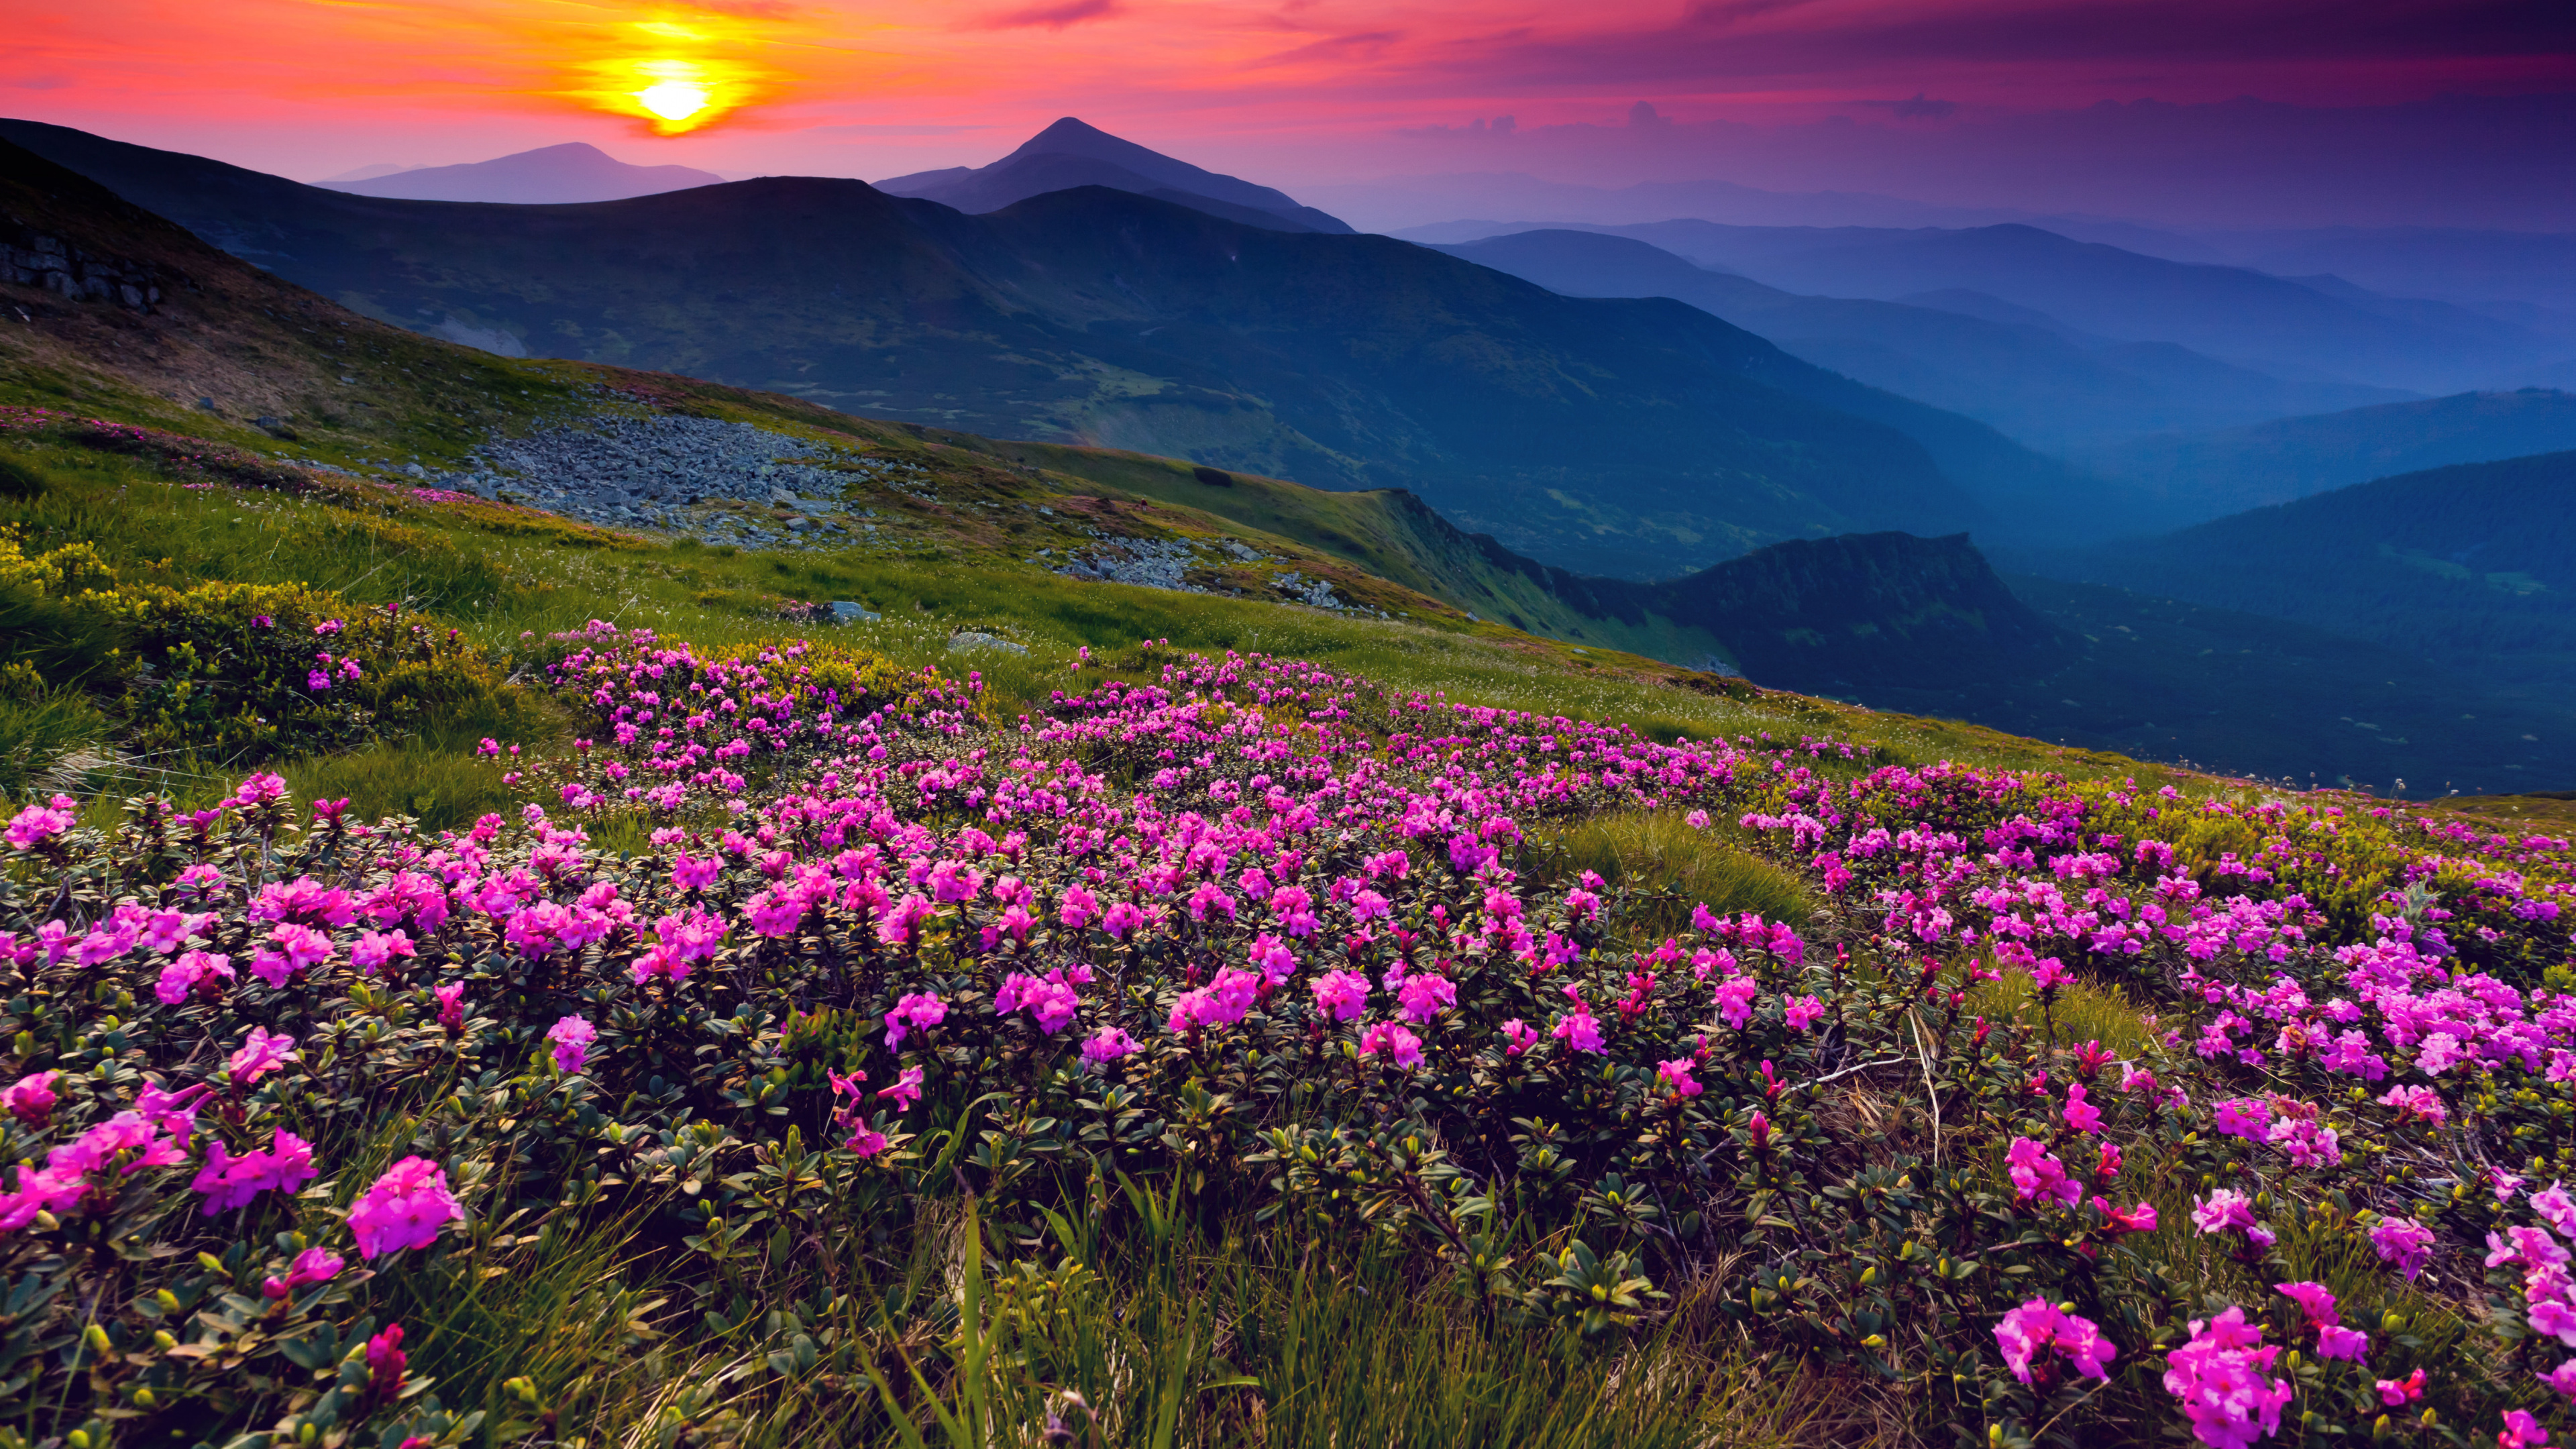 Purple Flower Field Near Mountain During Daytime. Wallpaper in 3840x2160 Resolution